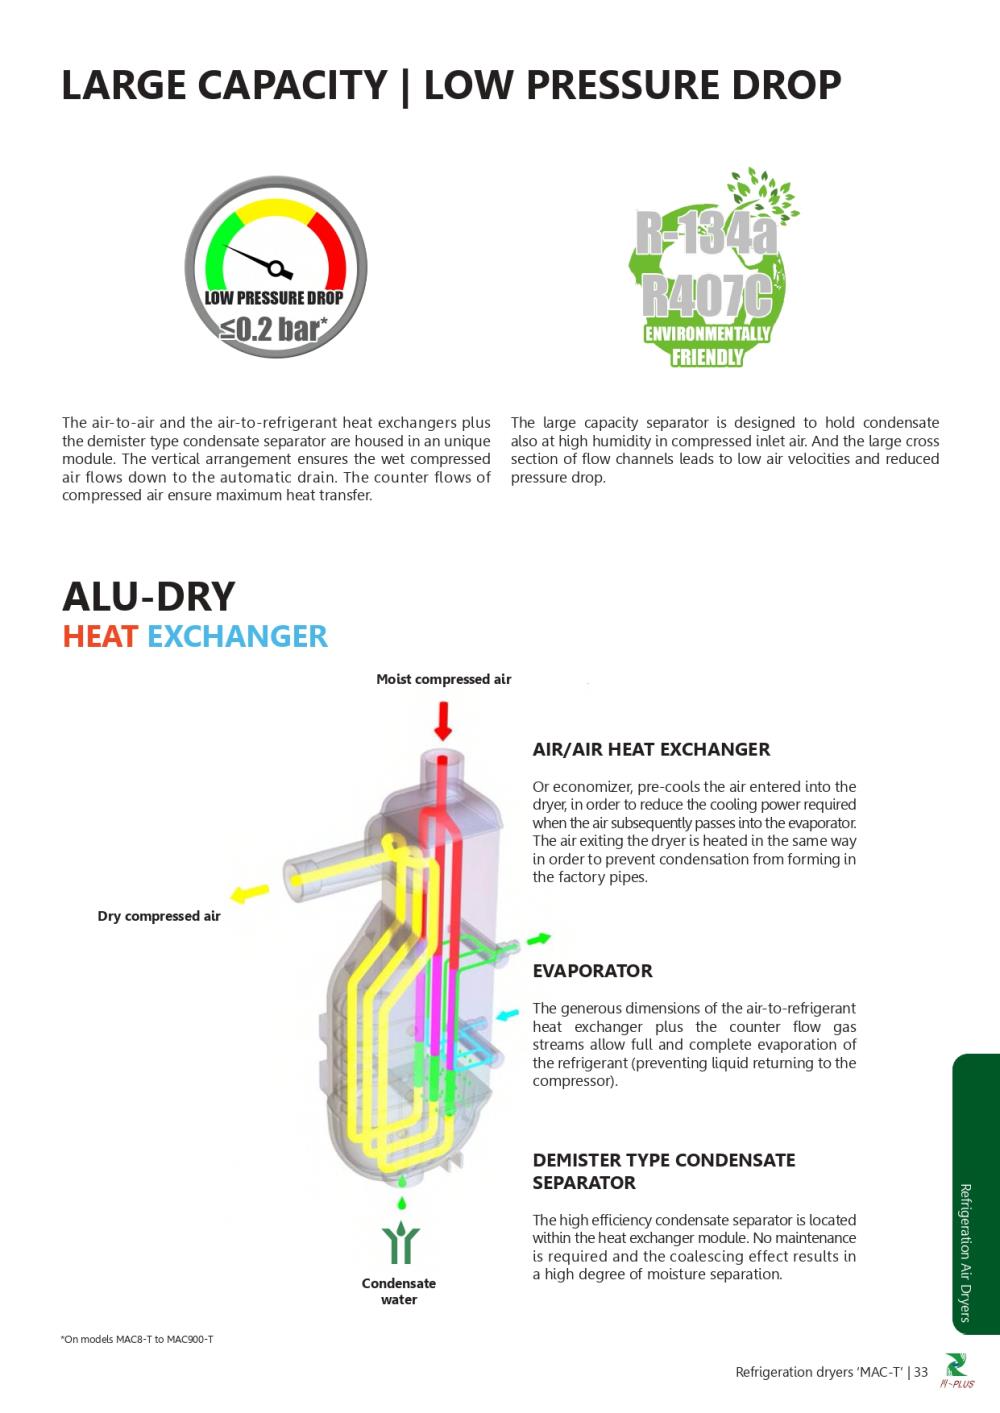 Air Dryer (Premium Dry Air) / เครื่องทำลมแห้ง ดิวพอยท์ 3 องศาเซลเซียส